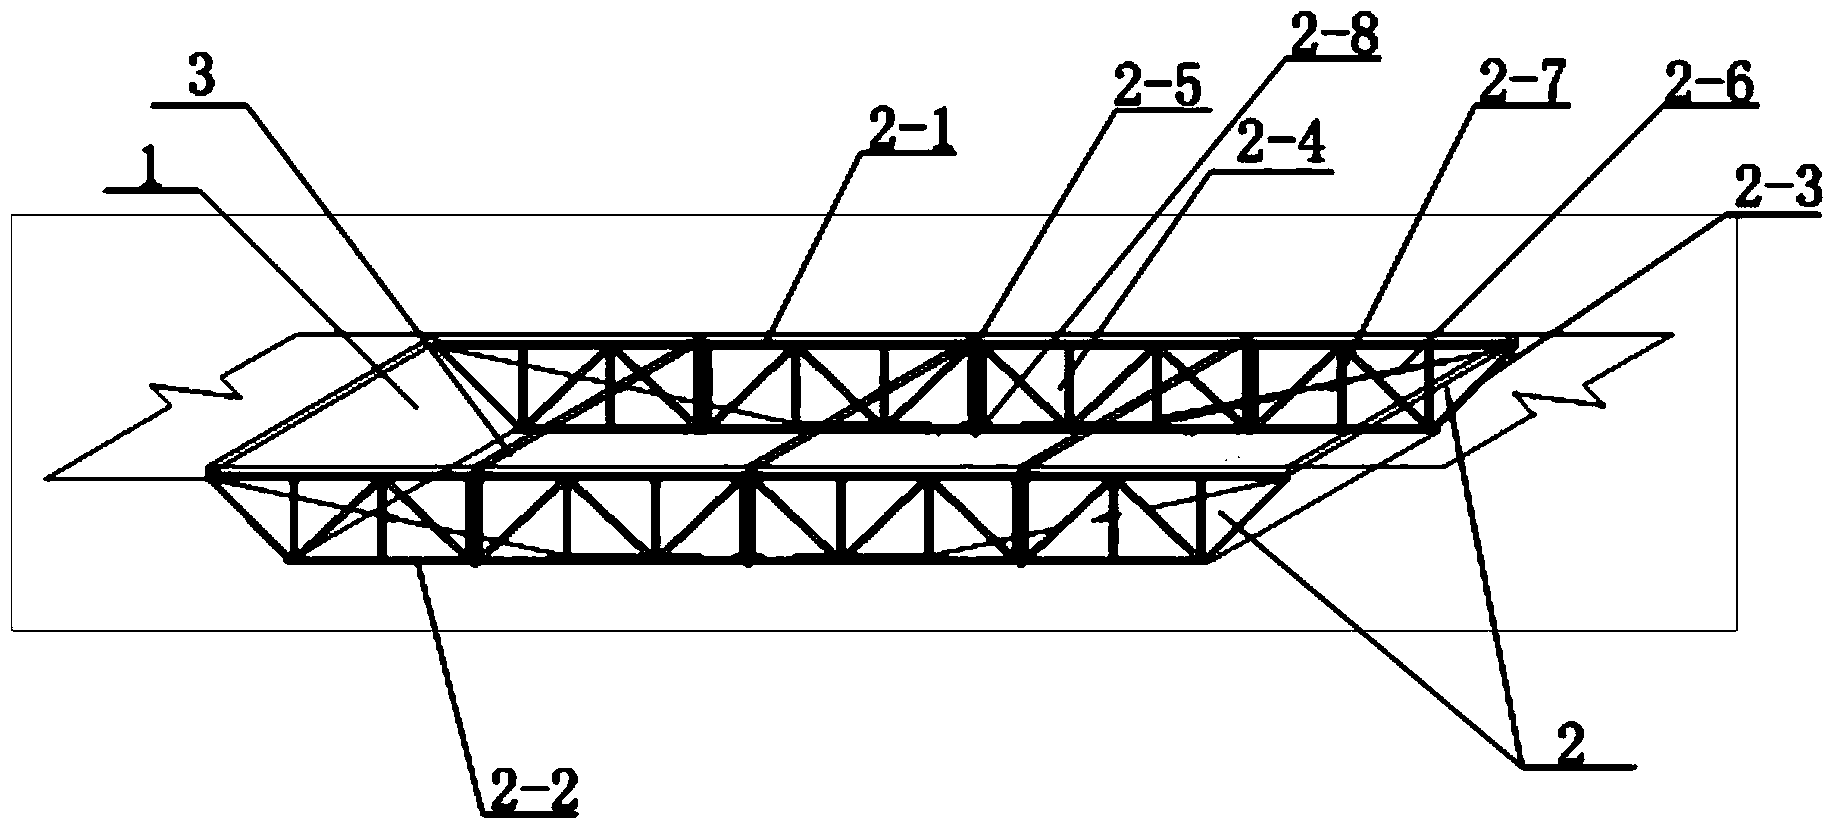 Deployable prestress steel truss bridge based on deflection pre-warning system